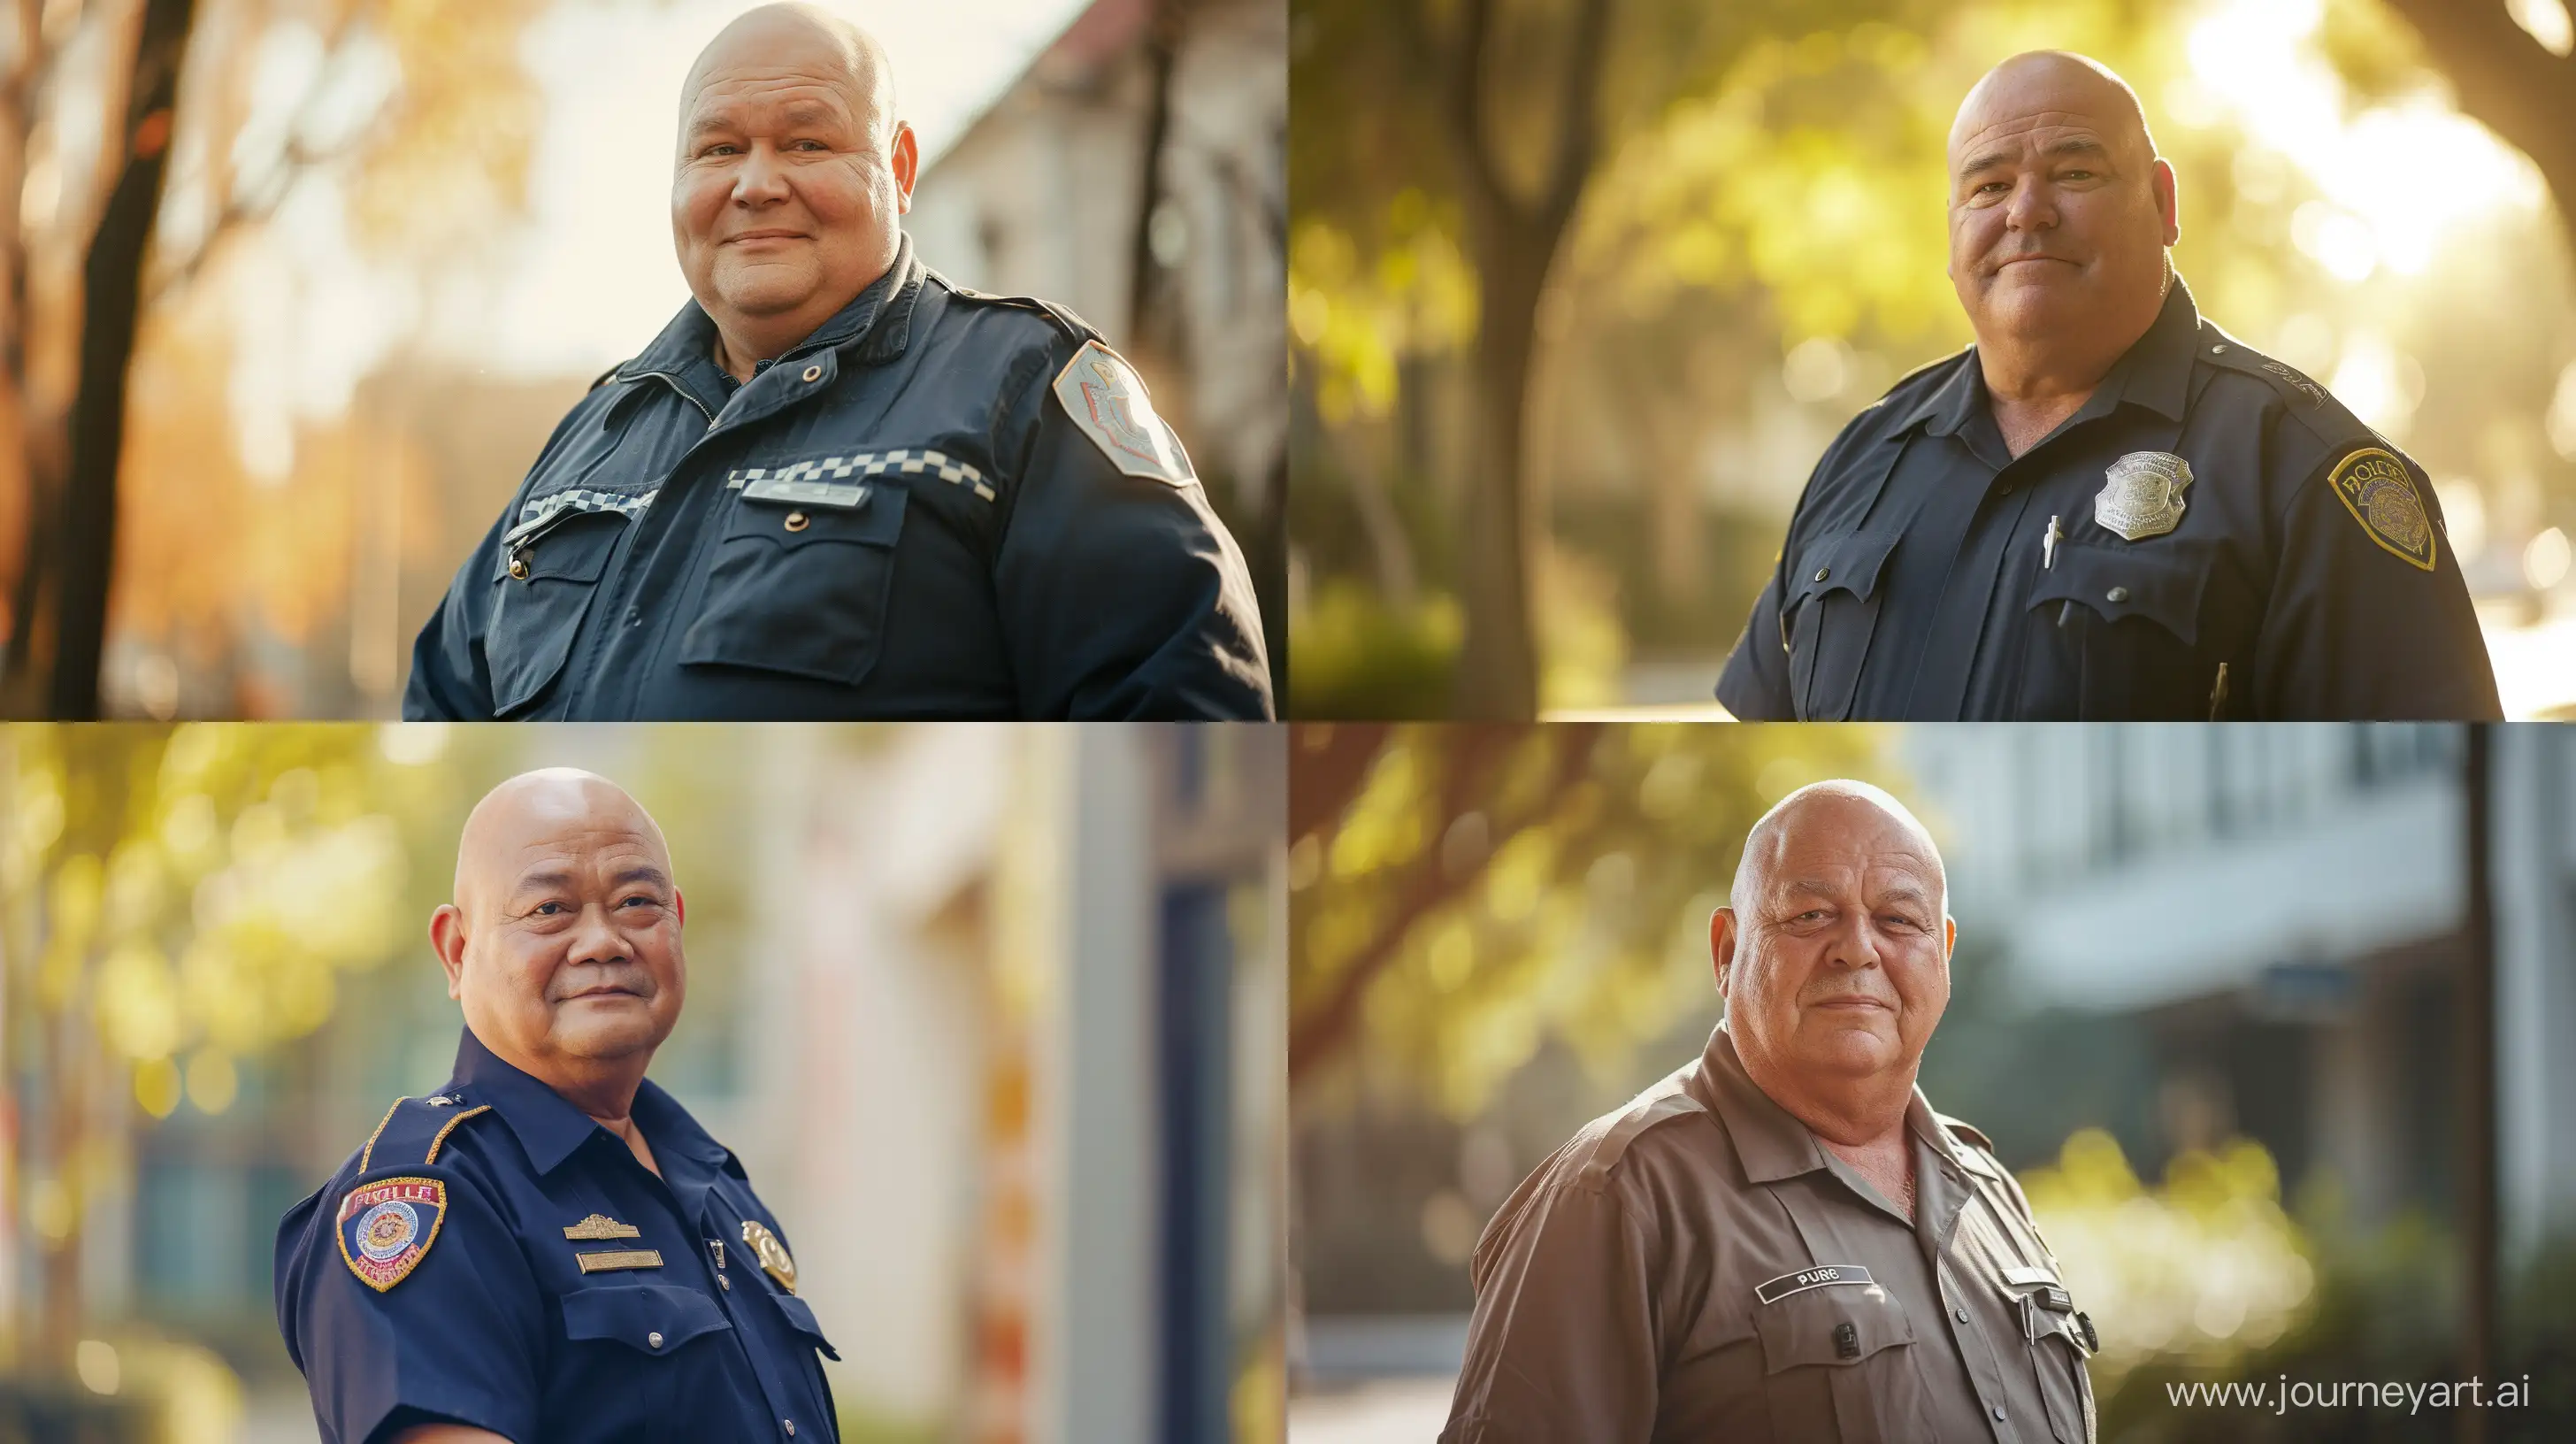 Elderly-Police-Officer-in-Crisp-Uniform-under-Natural-Light